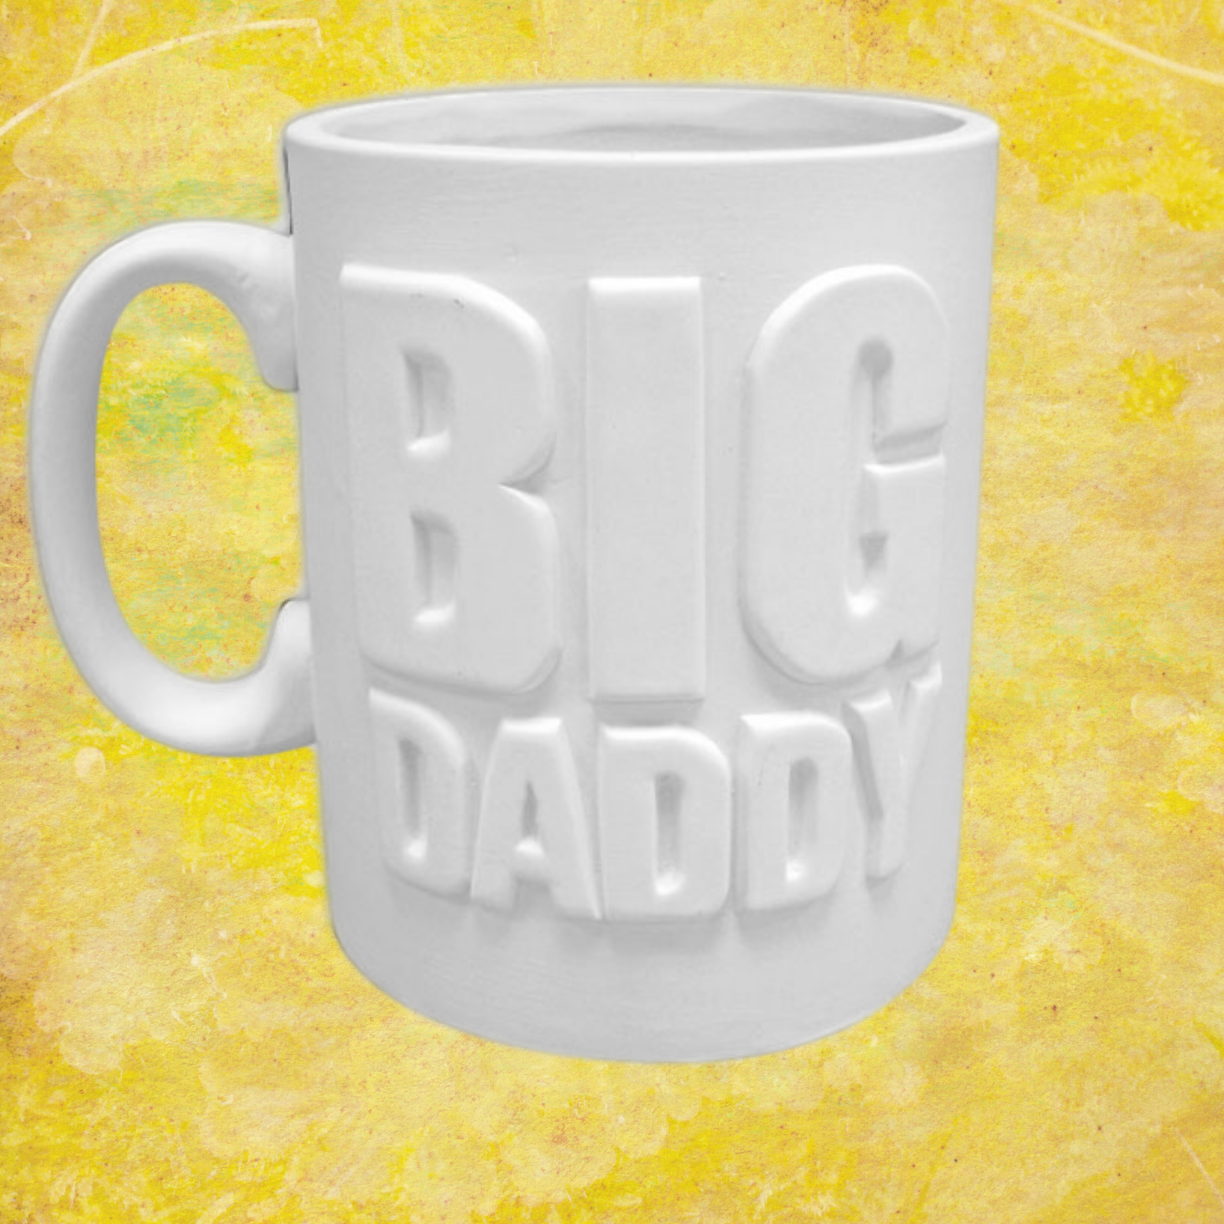 Do Little Things With Big Love Jumbo Mug, 60 oz. - Mugs & Teacups - Hallmark